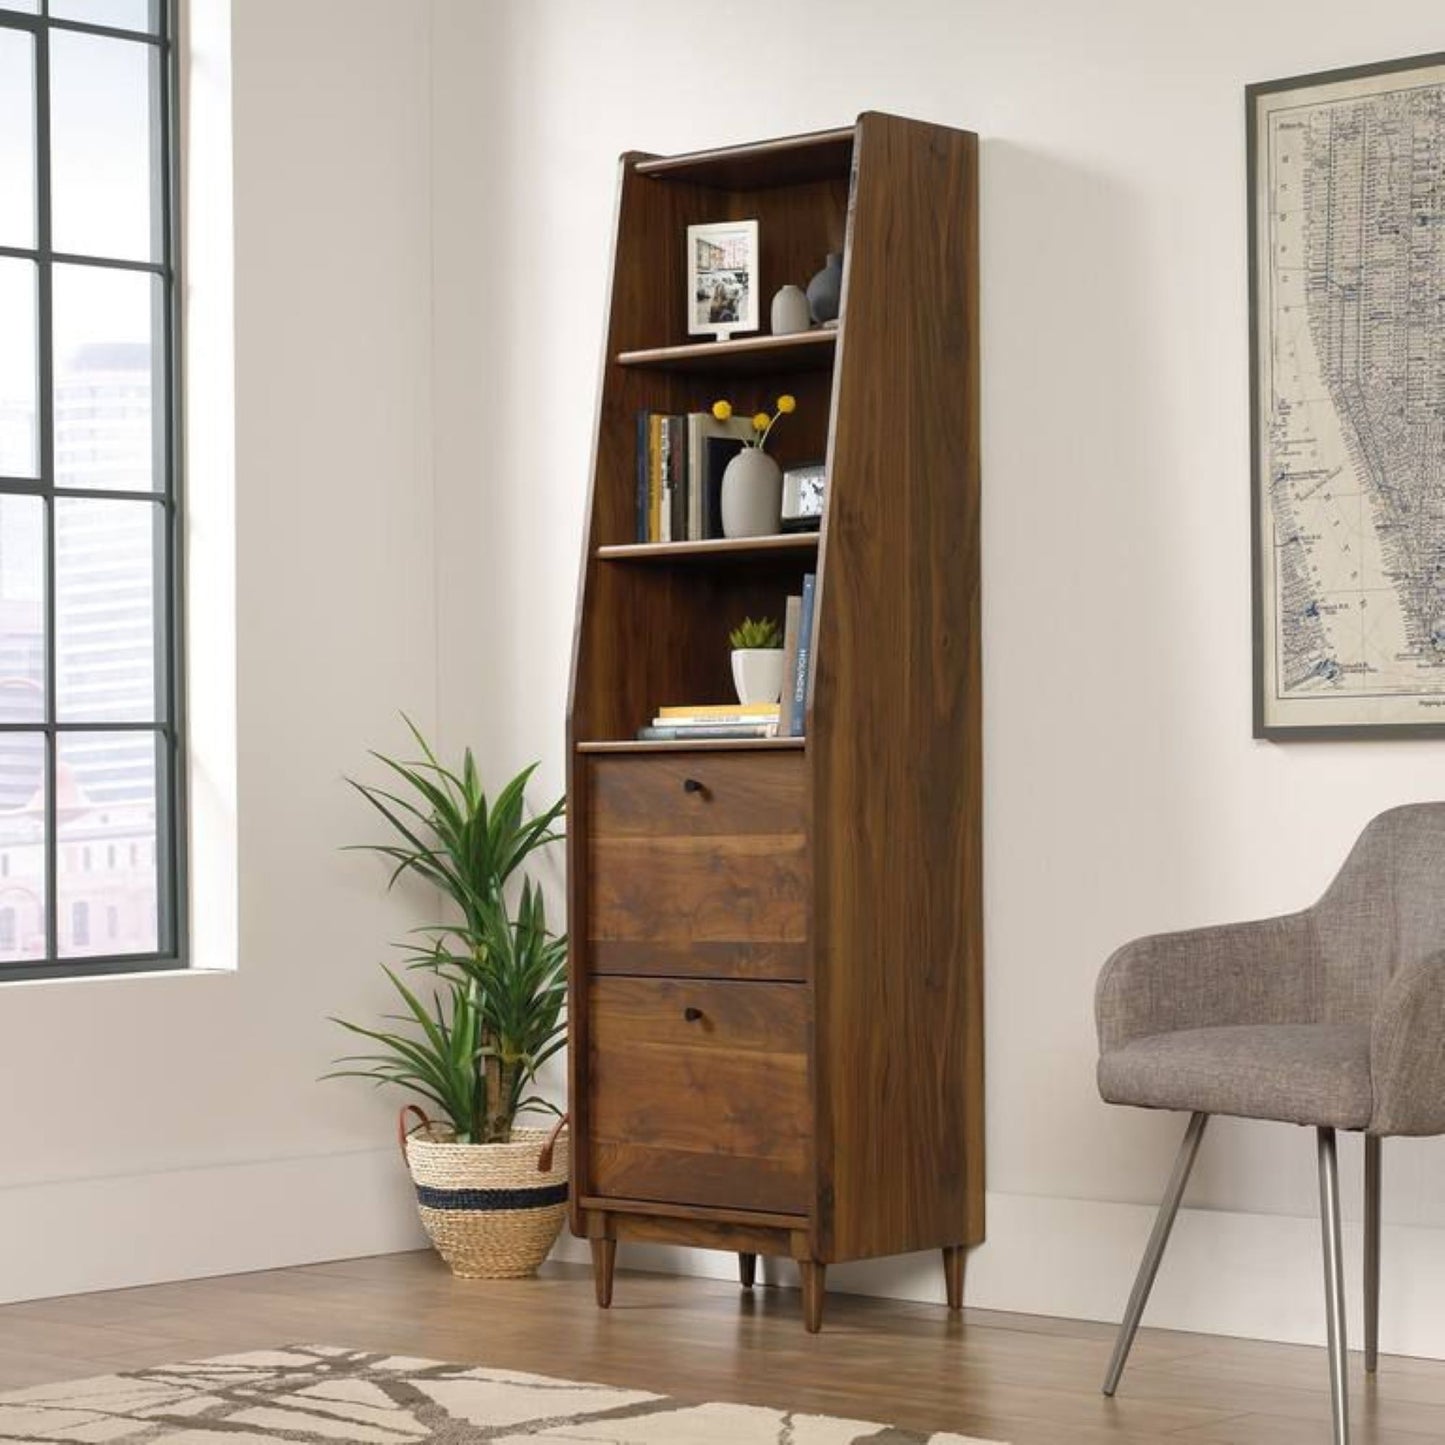 Elegant mid century/ retro style narrow bookcase in walnut finish